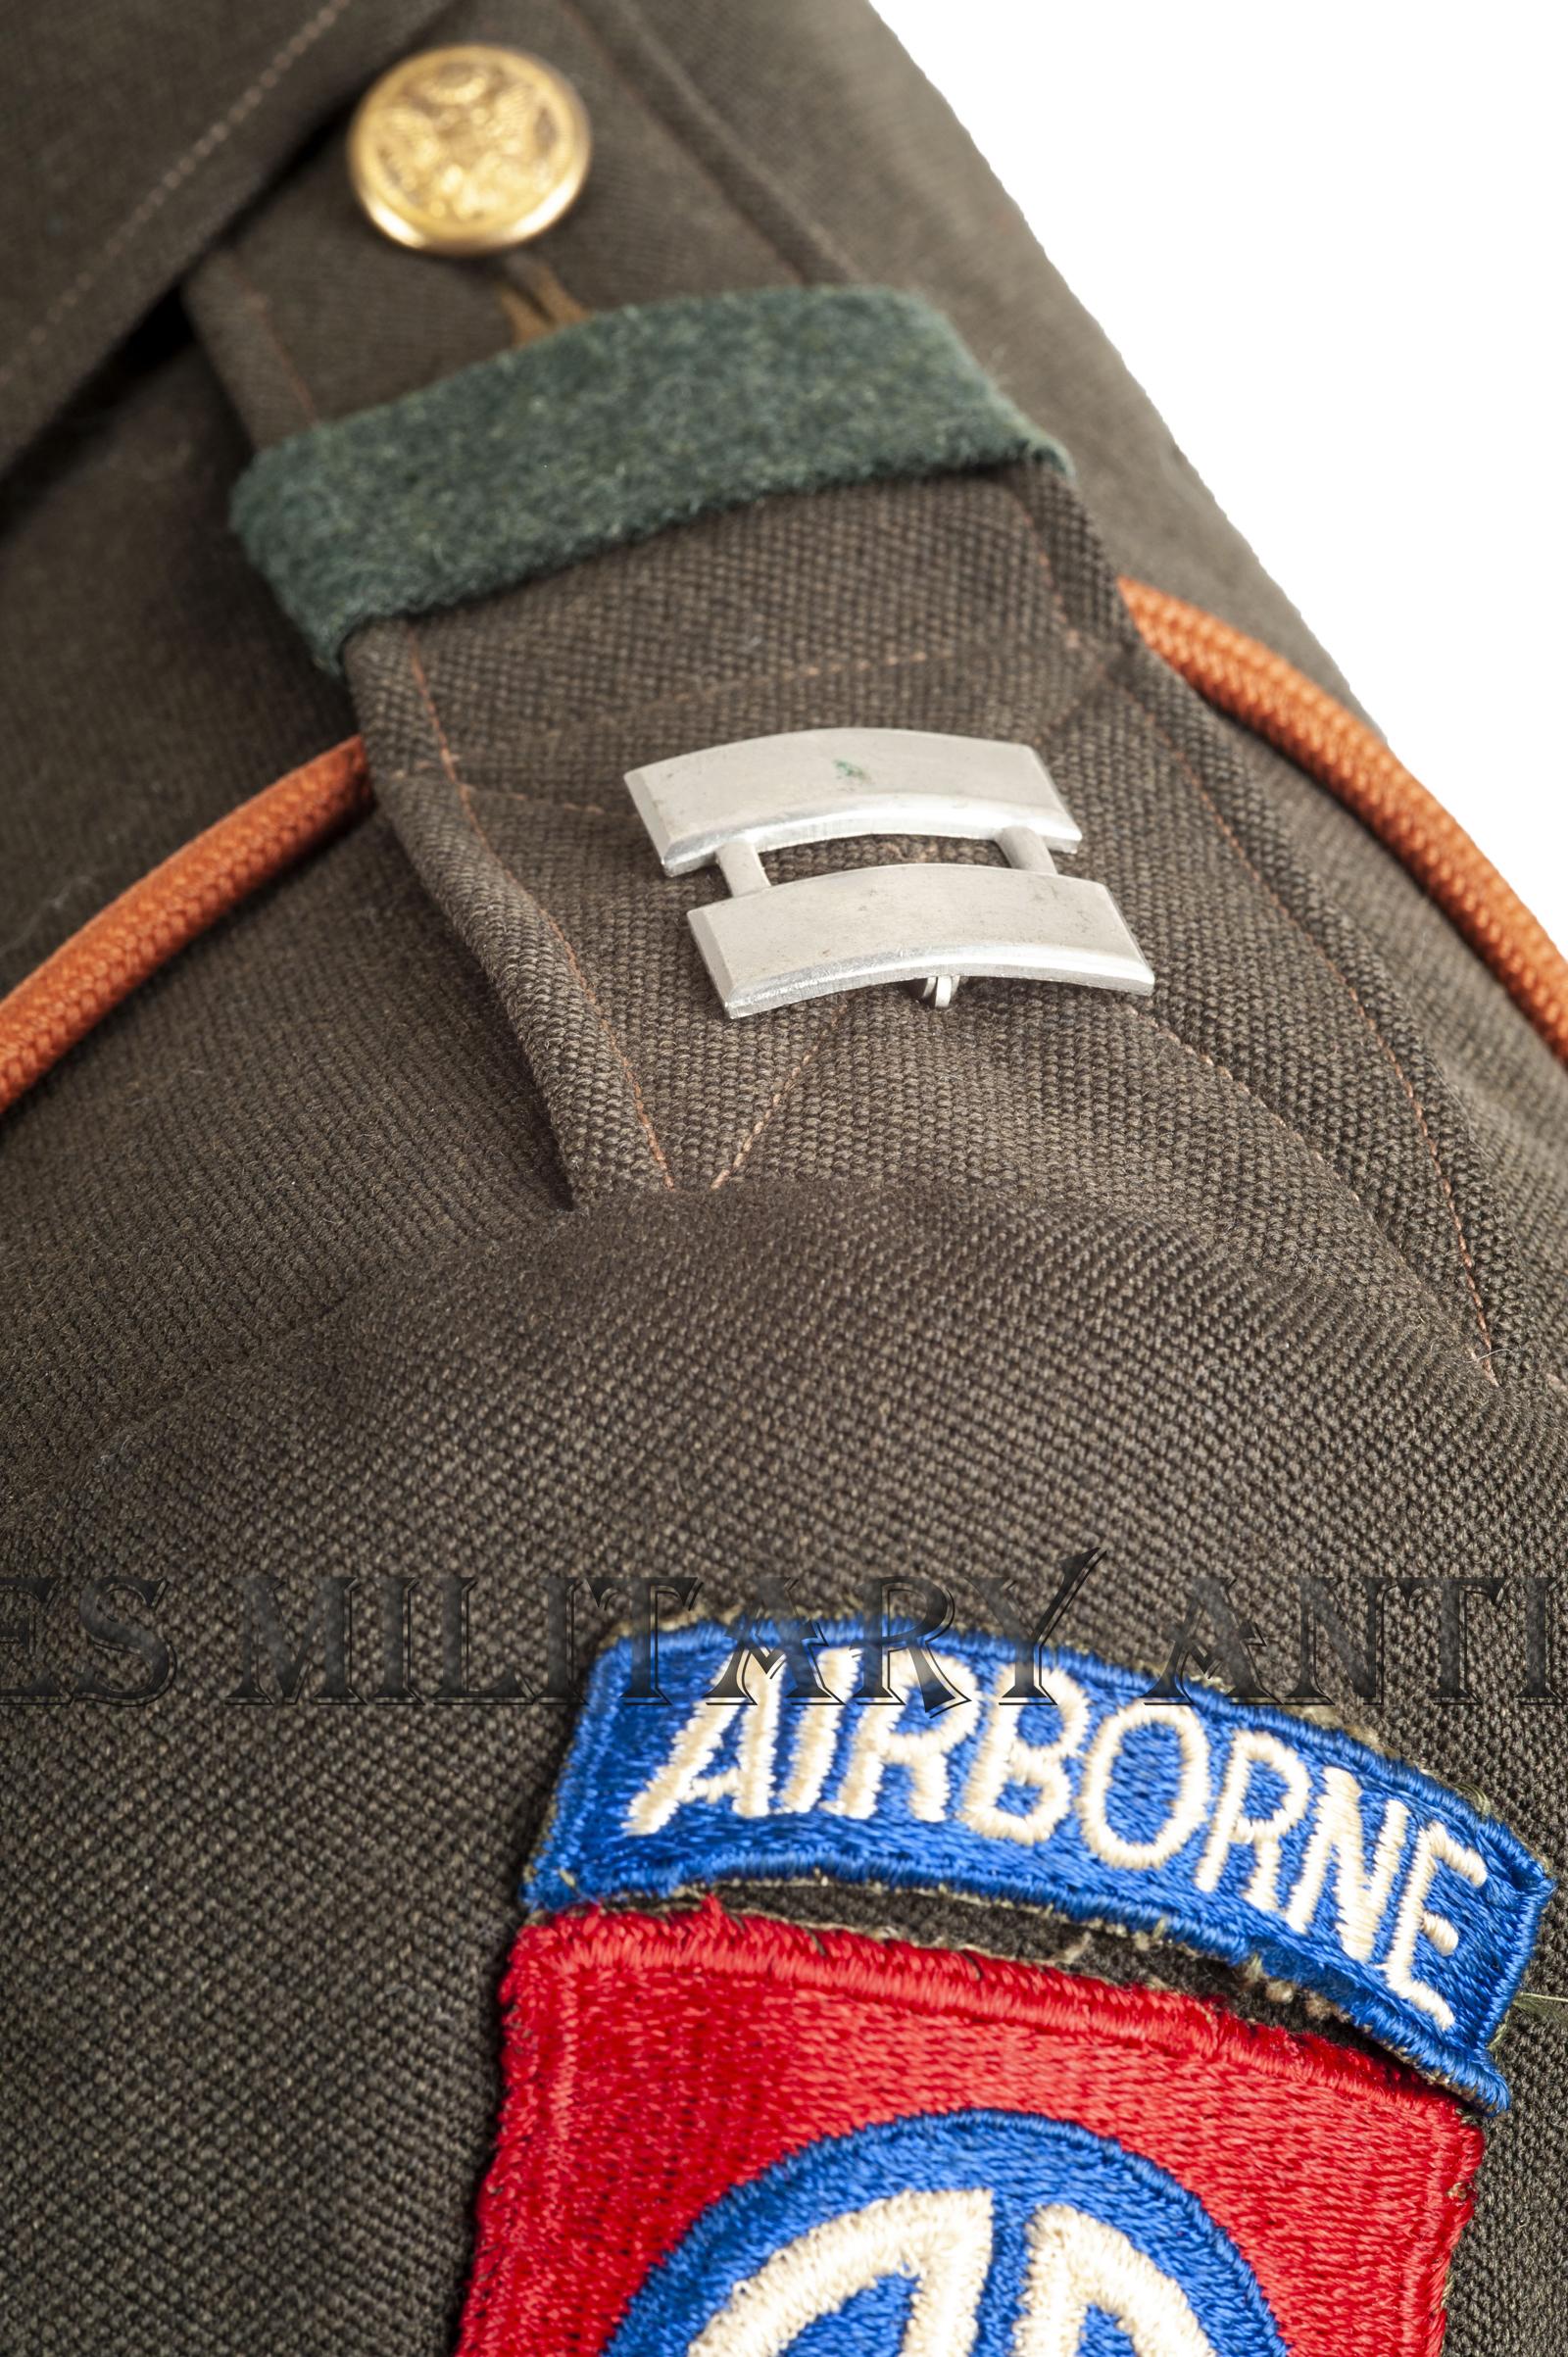 blouson-ike-jacket-officier-engineer-82eme-airborne-us-(8)